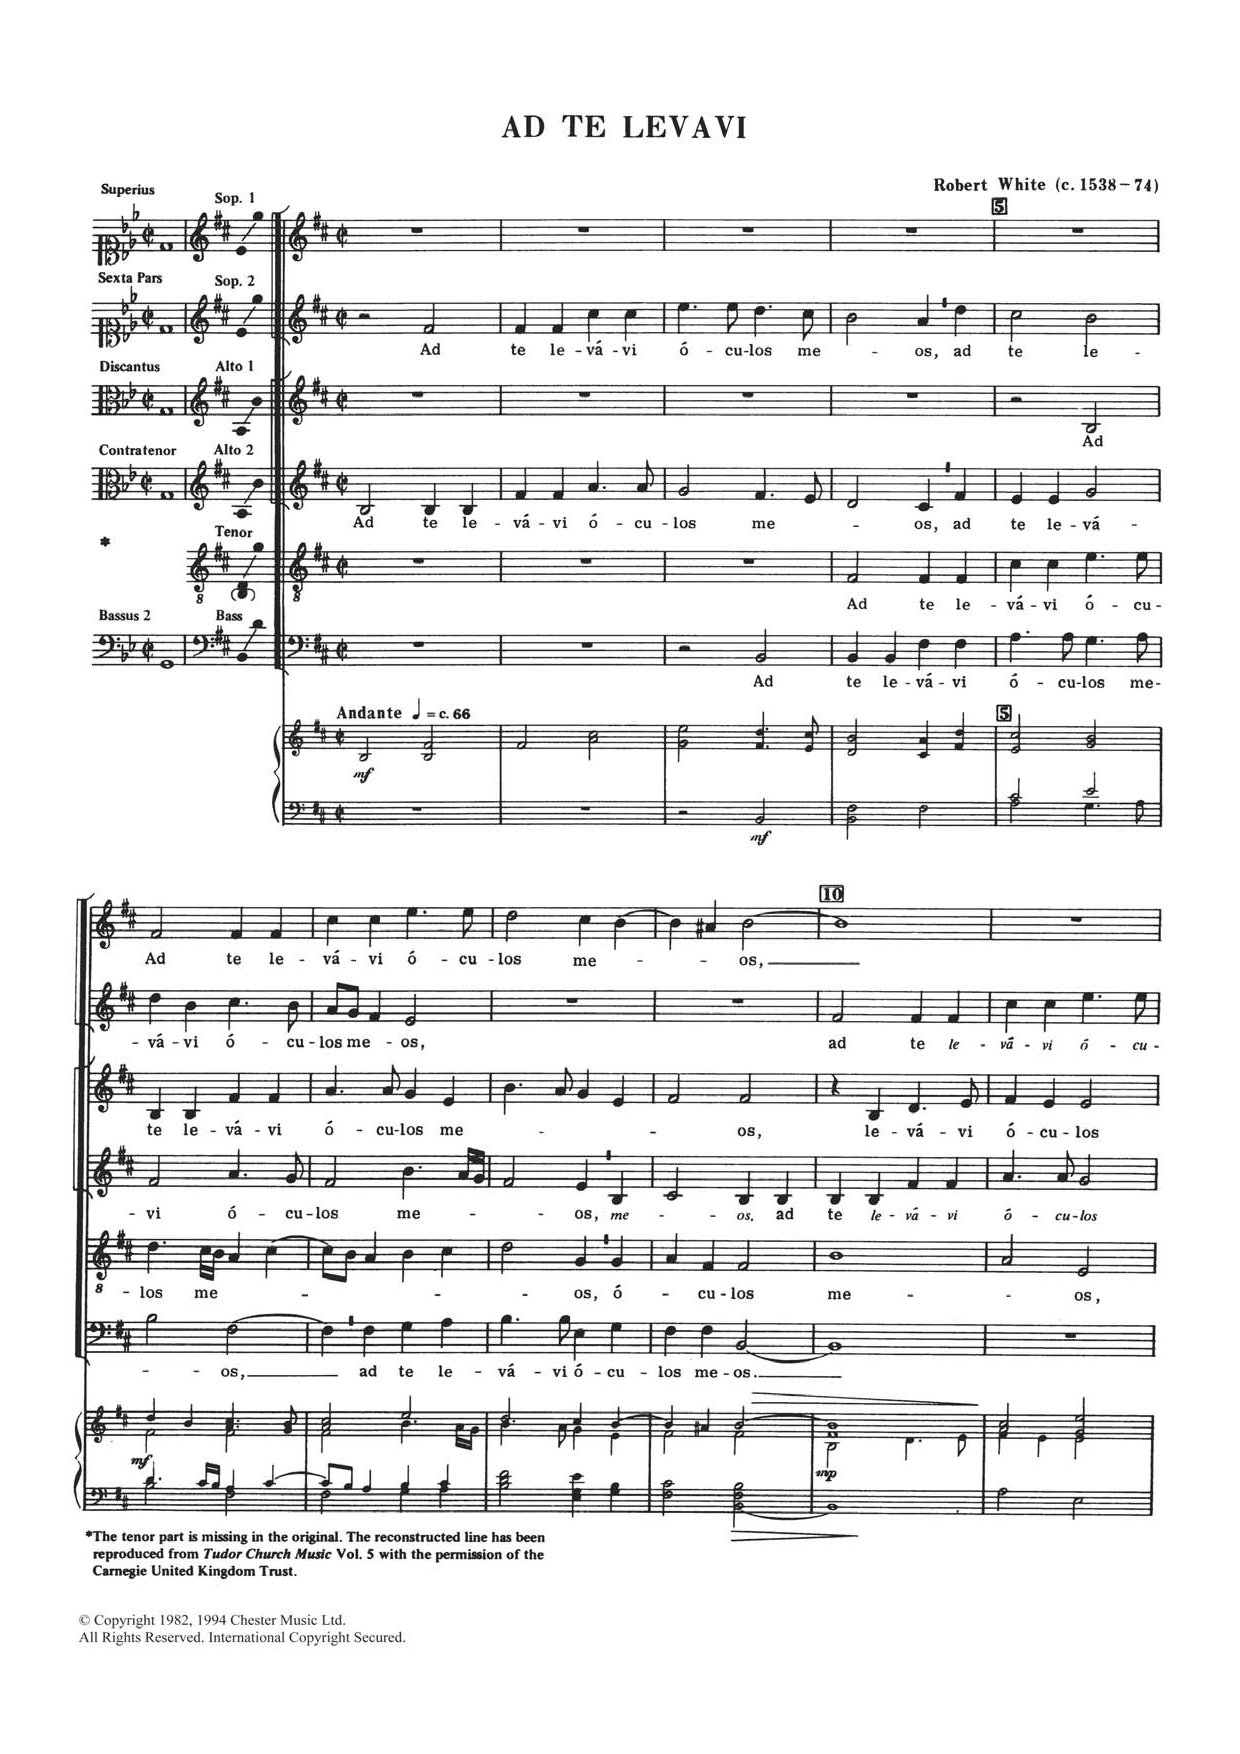 Robert White Ad Te Levavi sheet music notes and chords arranged for SATB Choir